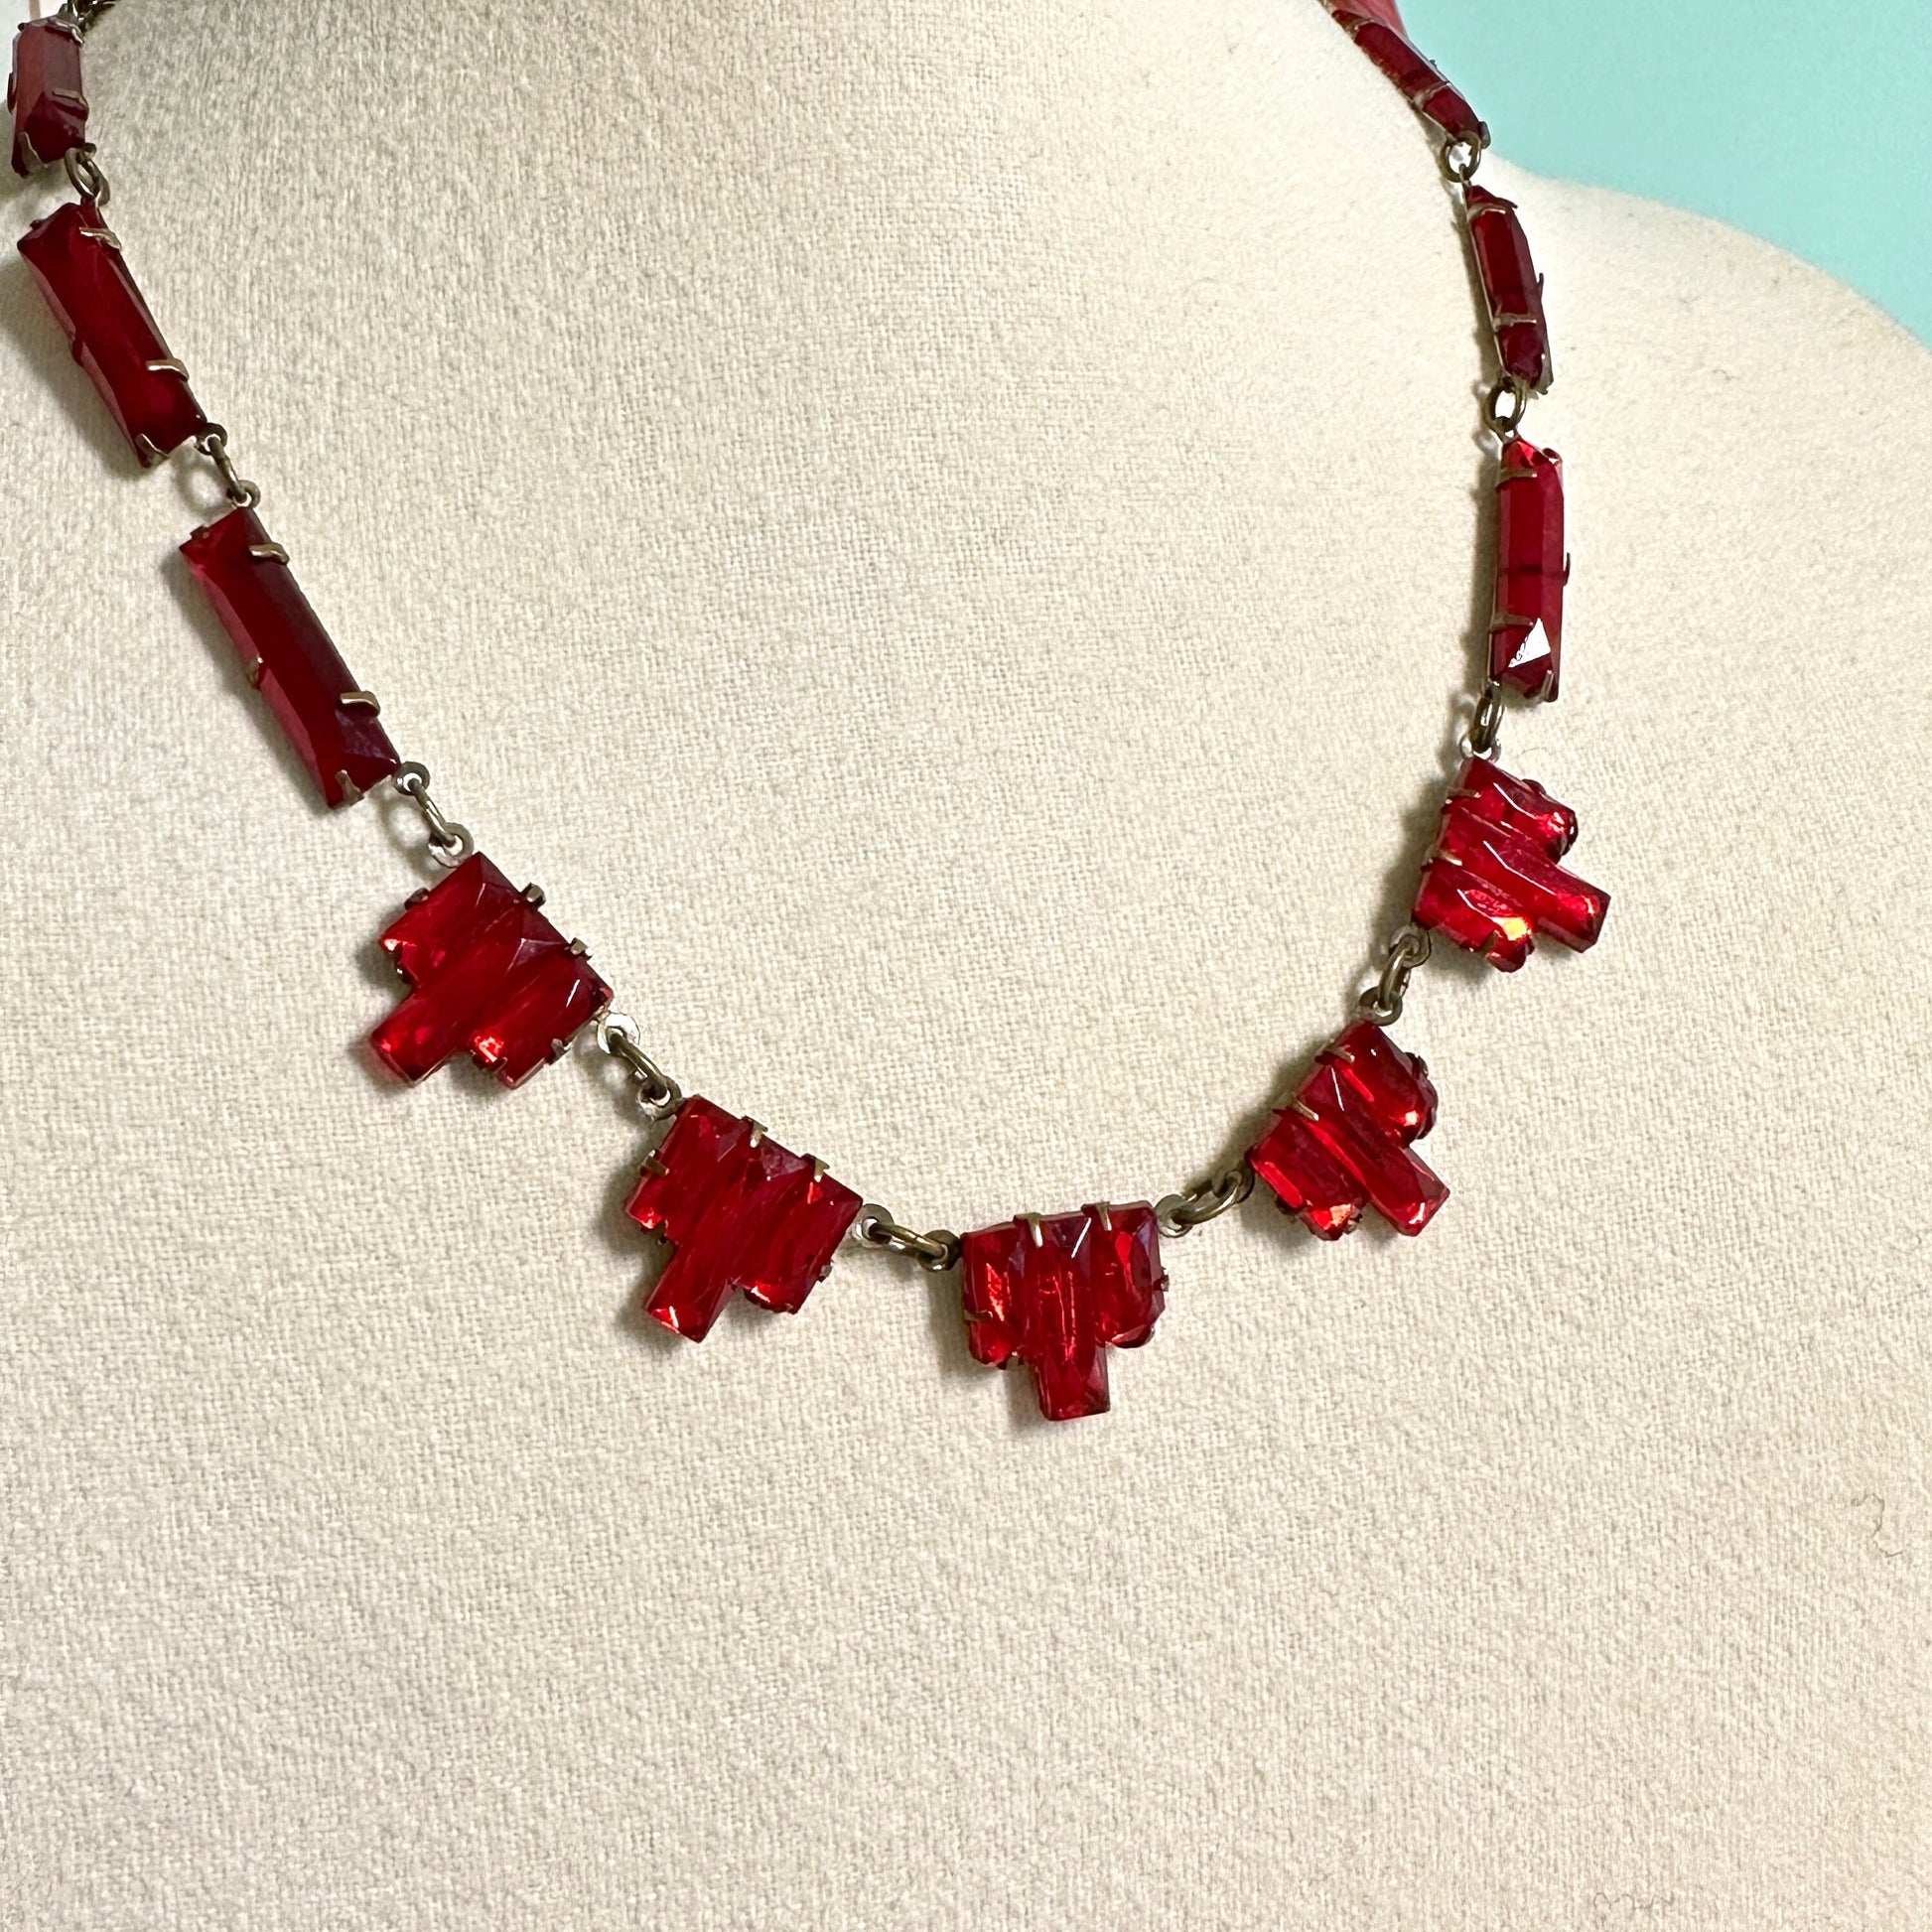 Antique Art Deco red mirror glass necklace ~ Czech vauxhall glass necklace c1920's